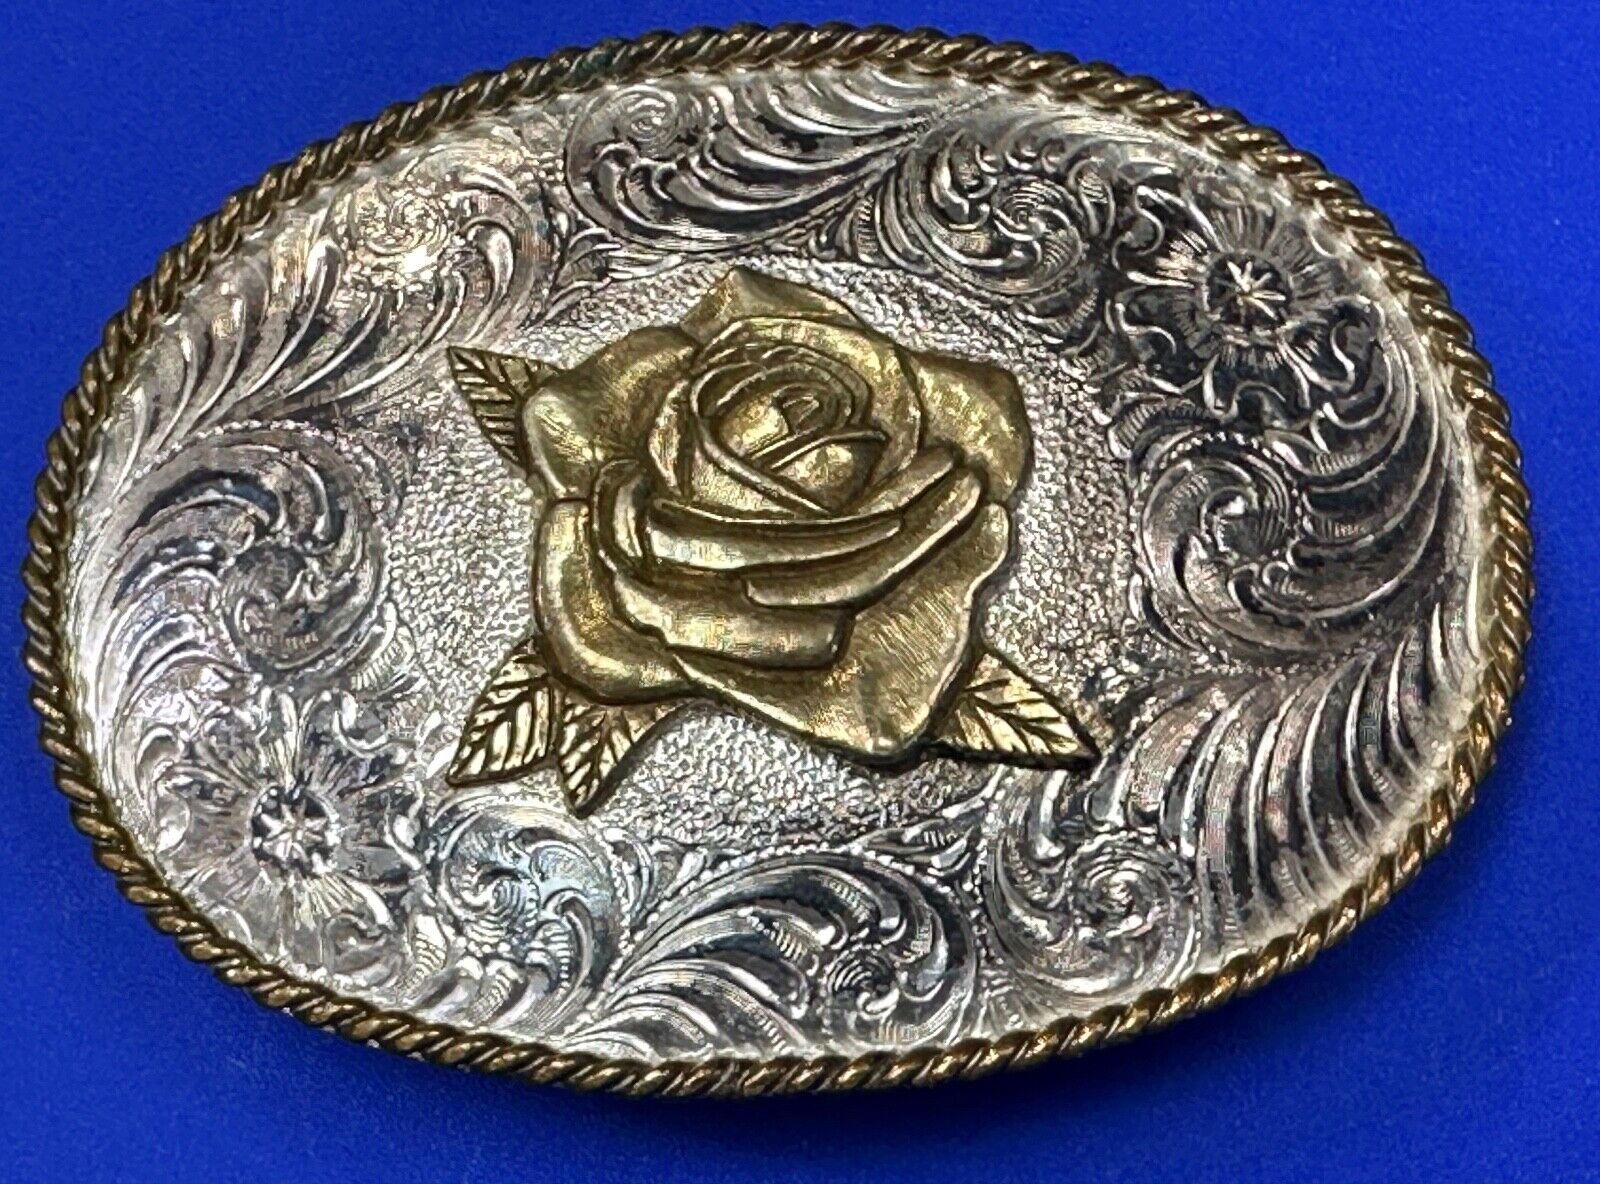 Beautiful Rose - vintage two tone ornate flower swirl western belt buckle by ADM